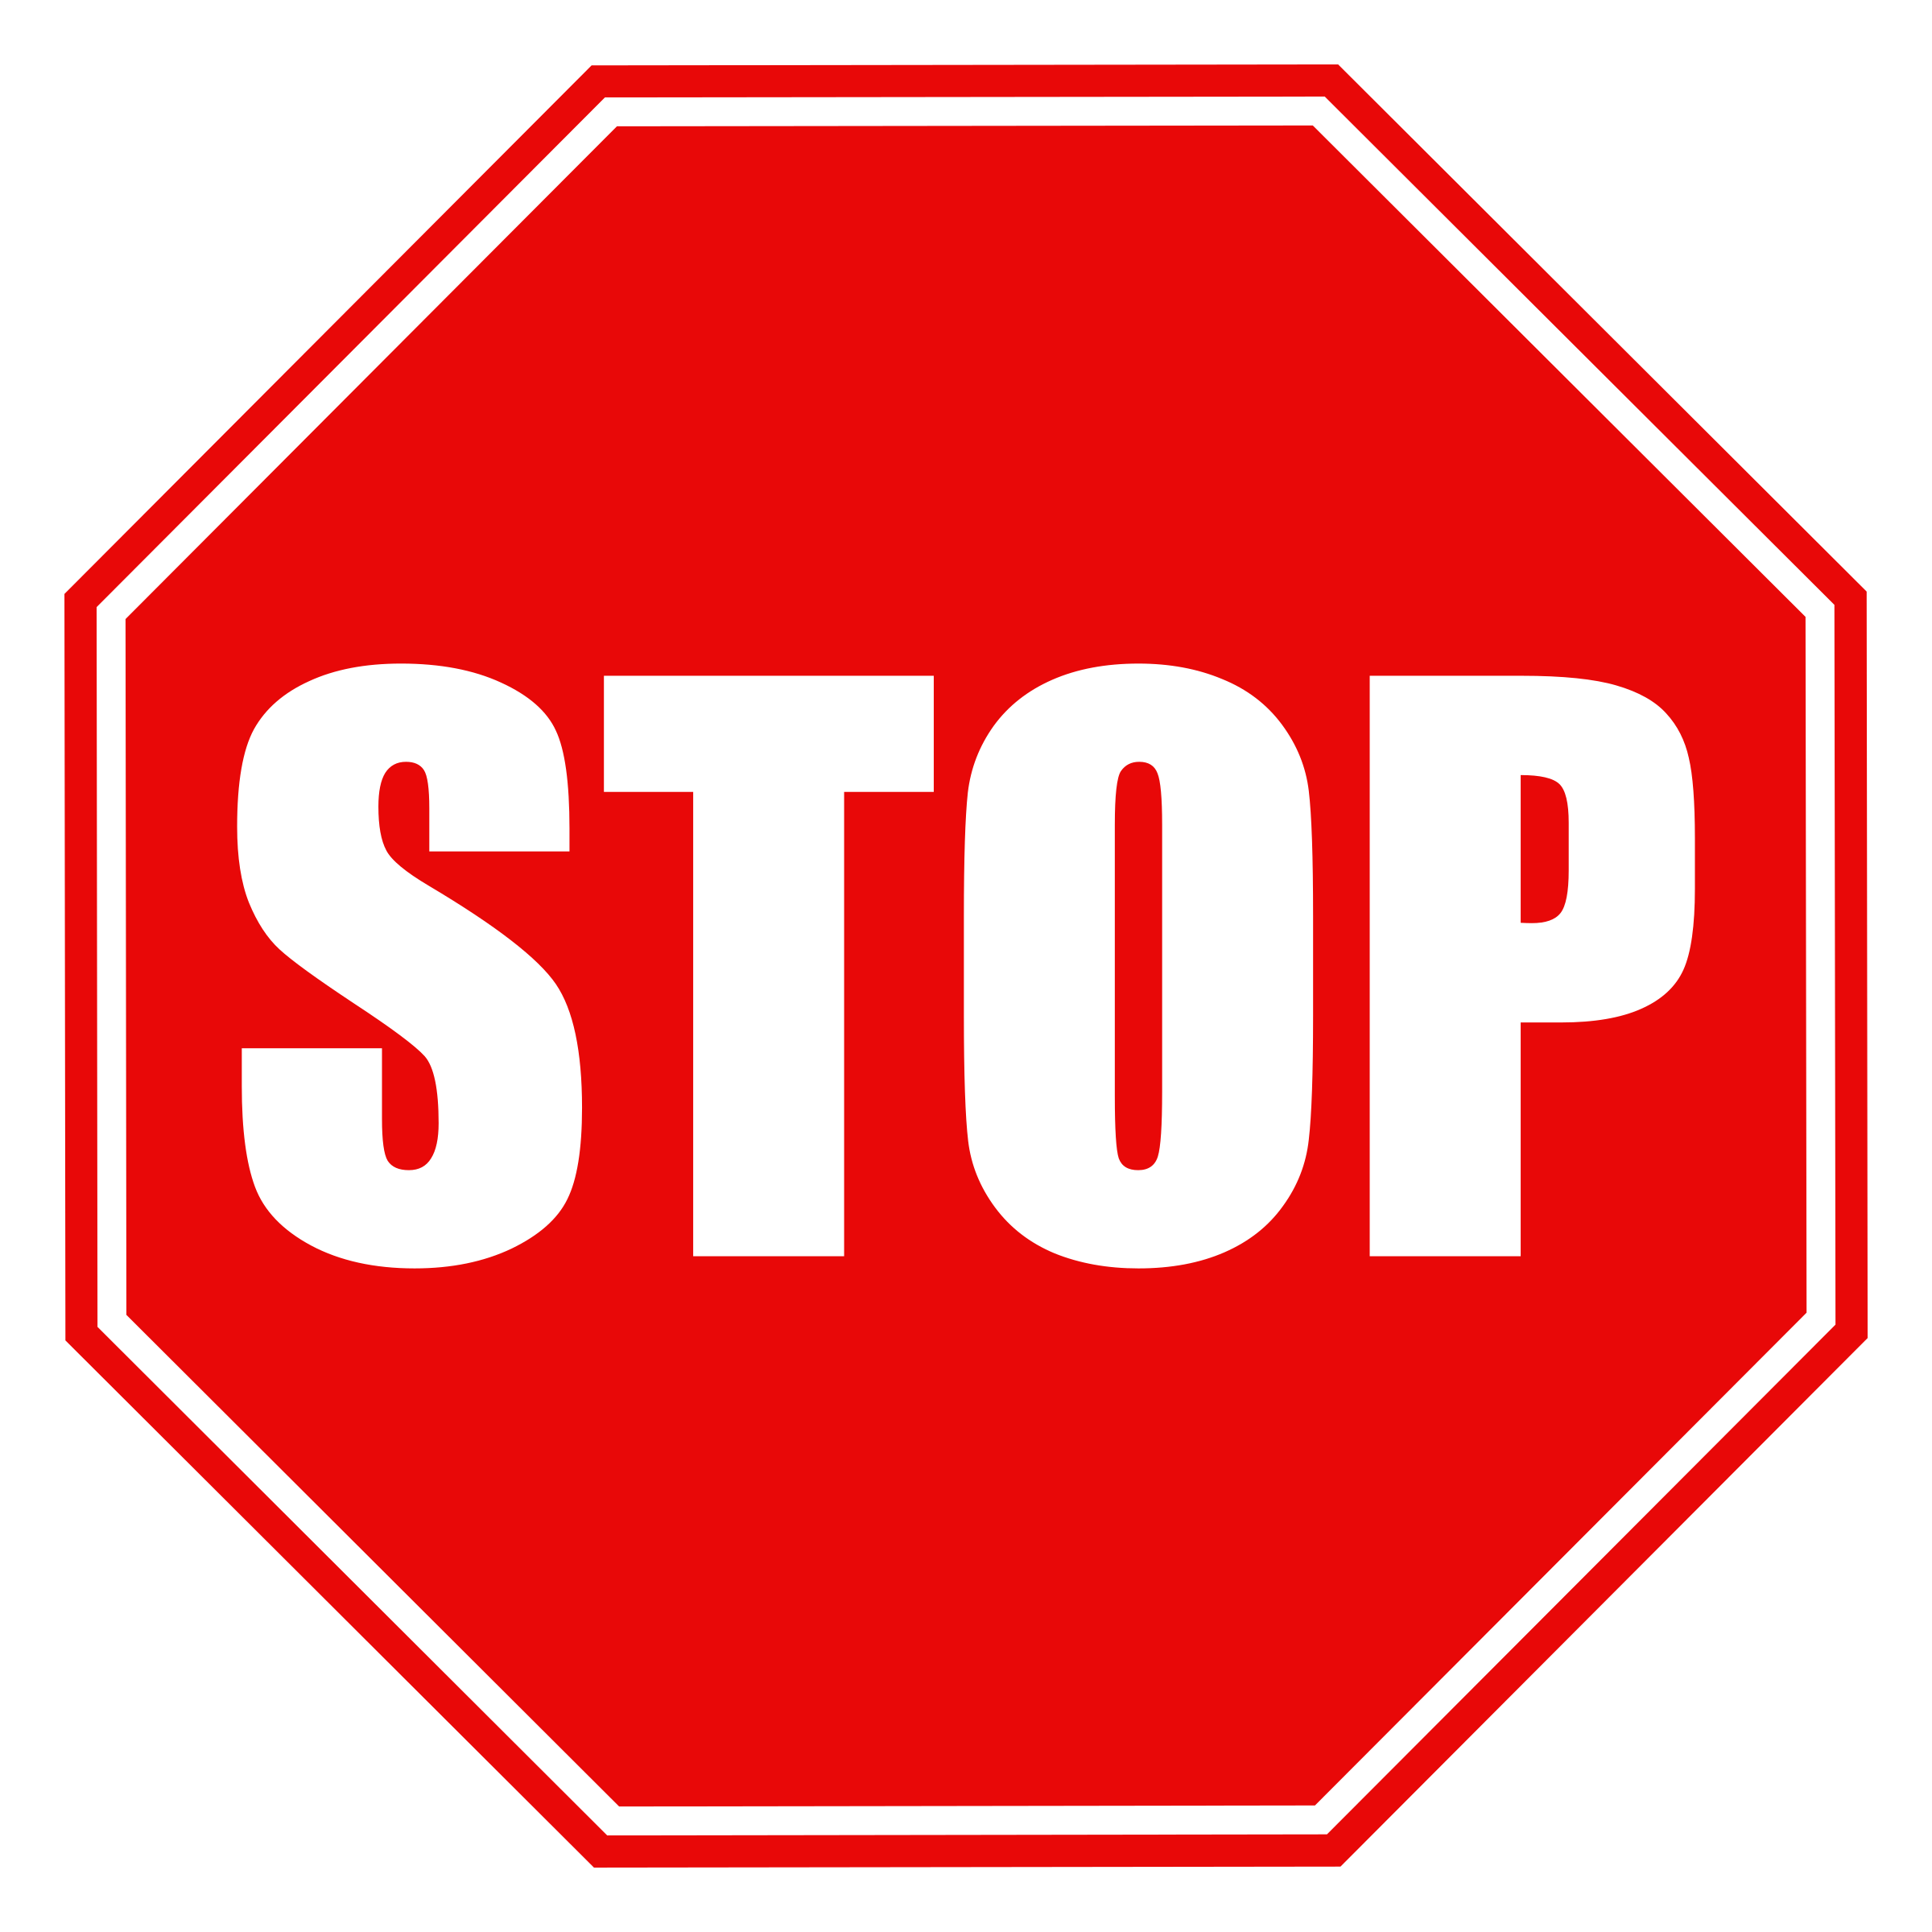 stop, houston astros logo vector png transparent houston astros #19363